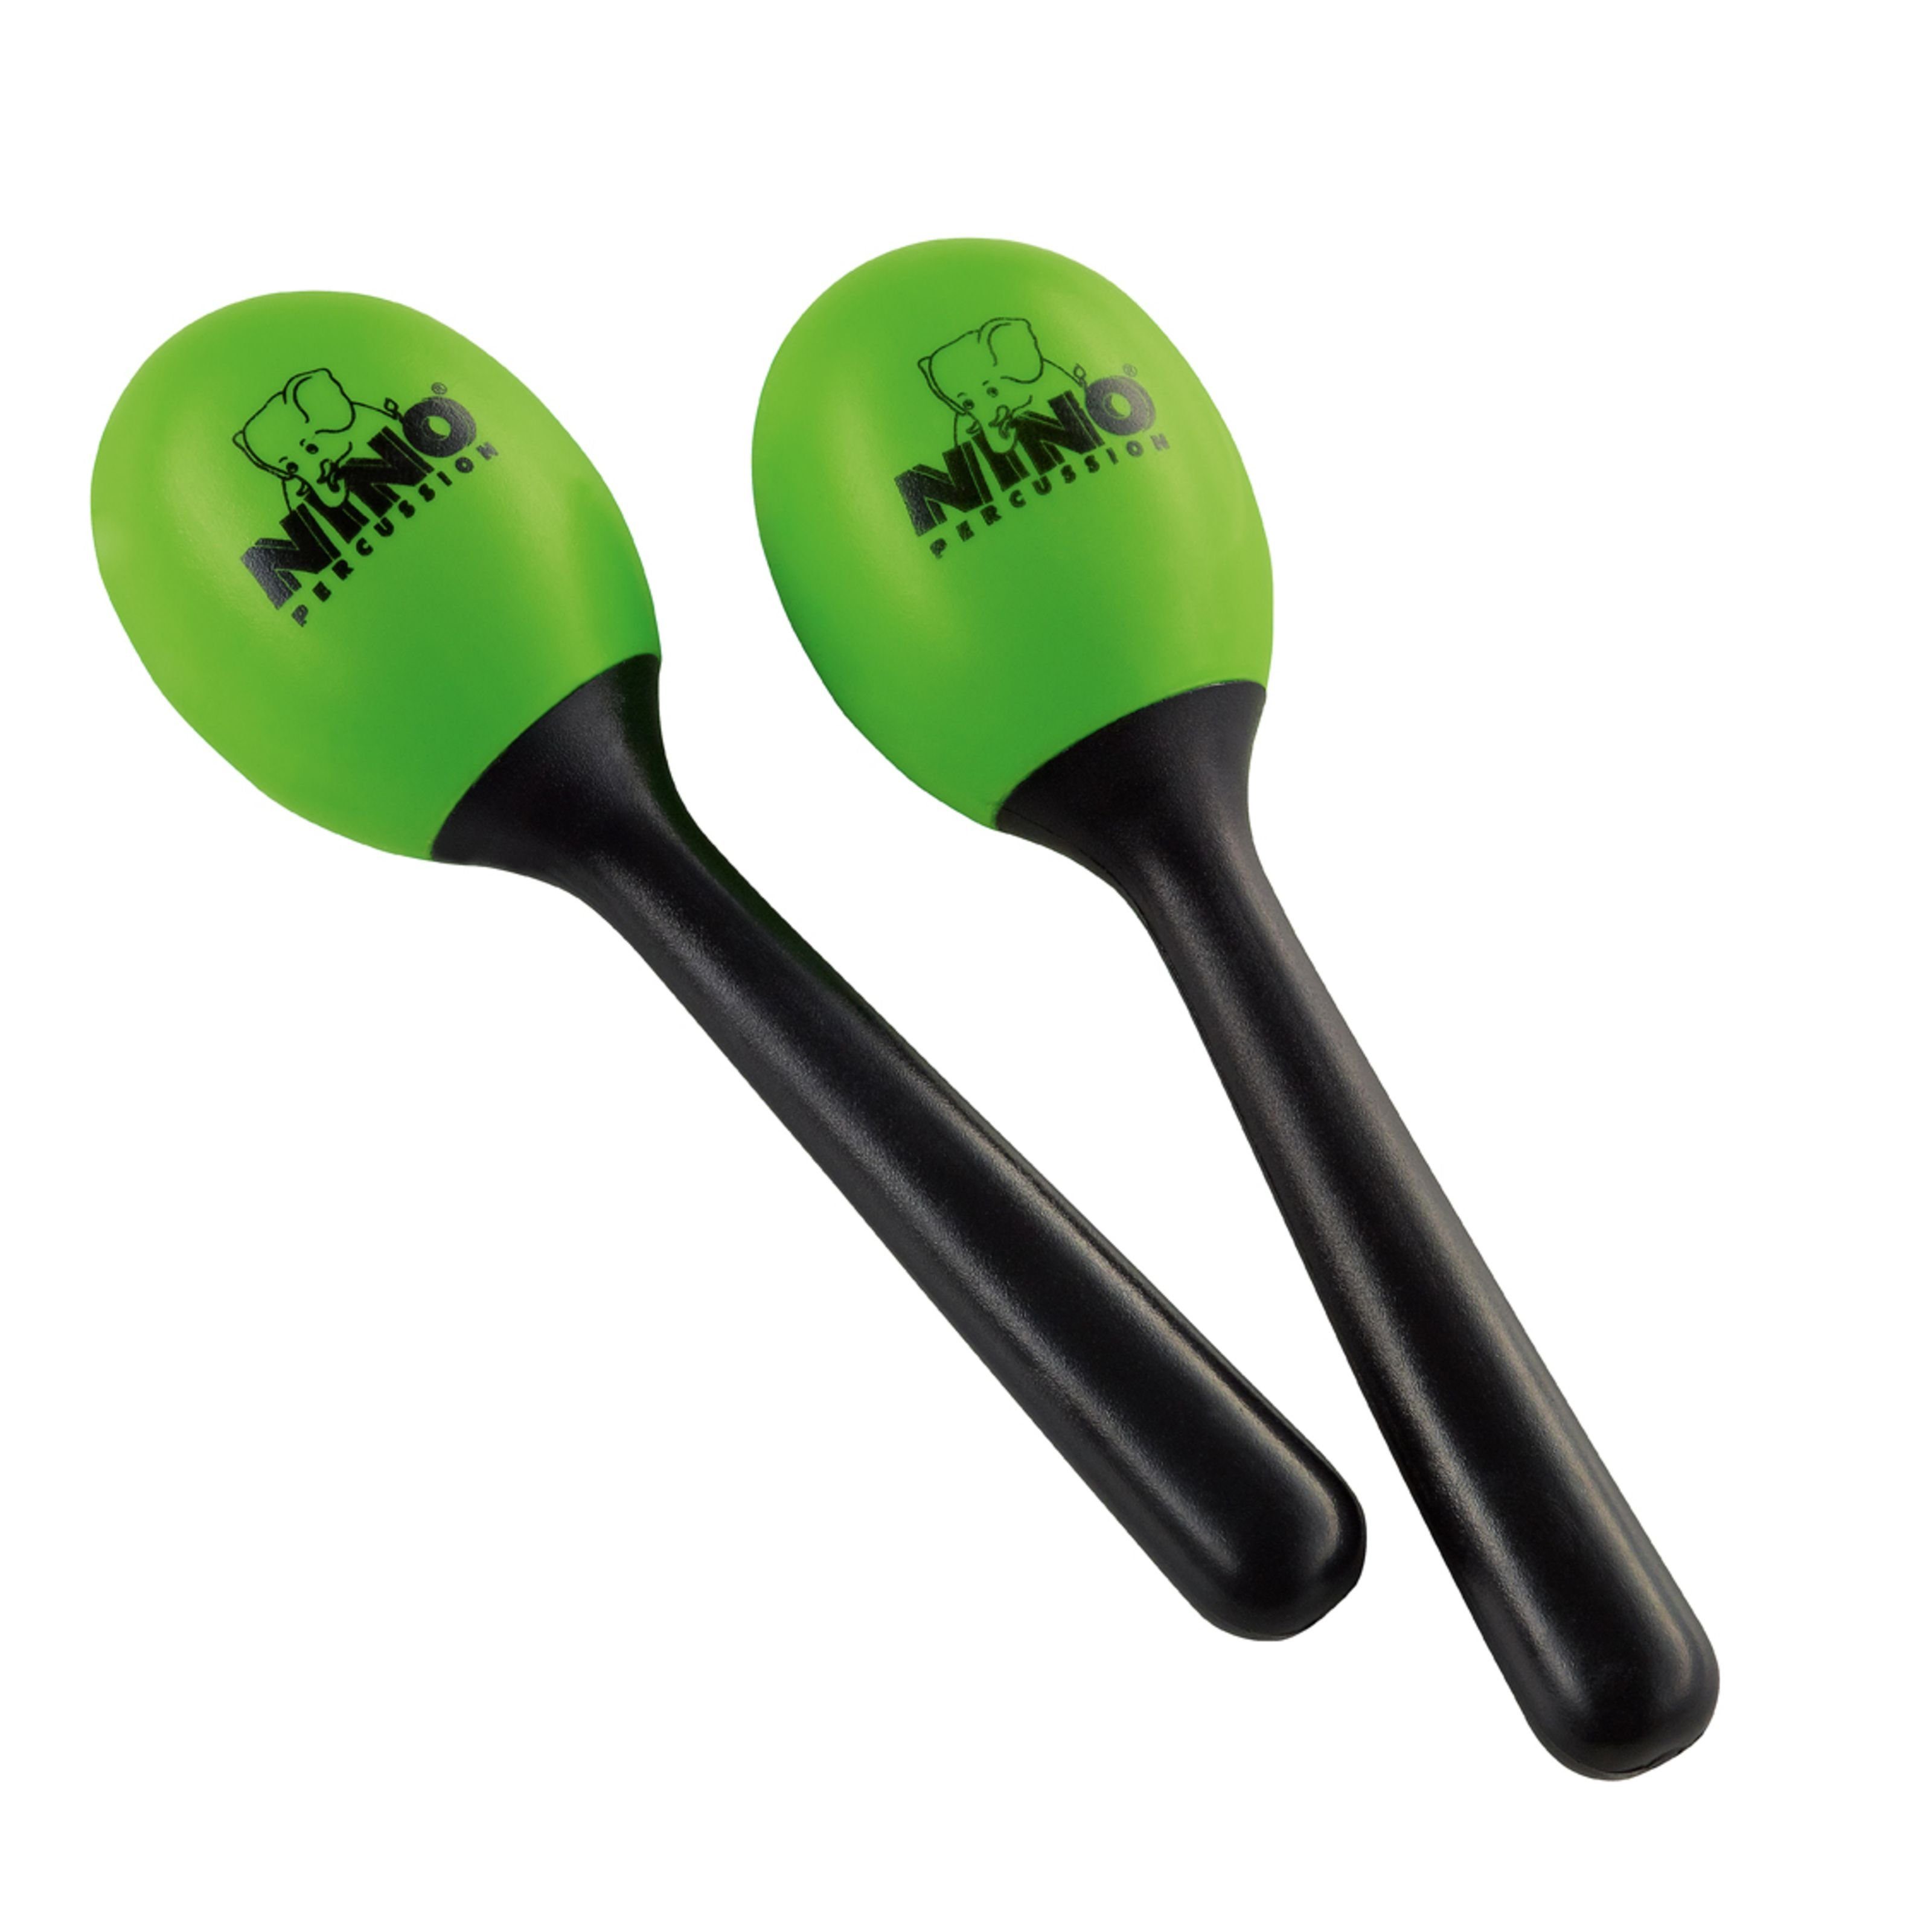 Meinl Percussion Spielzeug-Musikinstrument, Plastic Egg Maracas NINO569GG, Grasgrün - Shaker